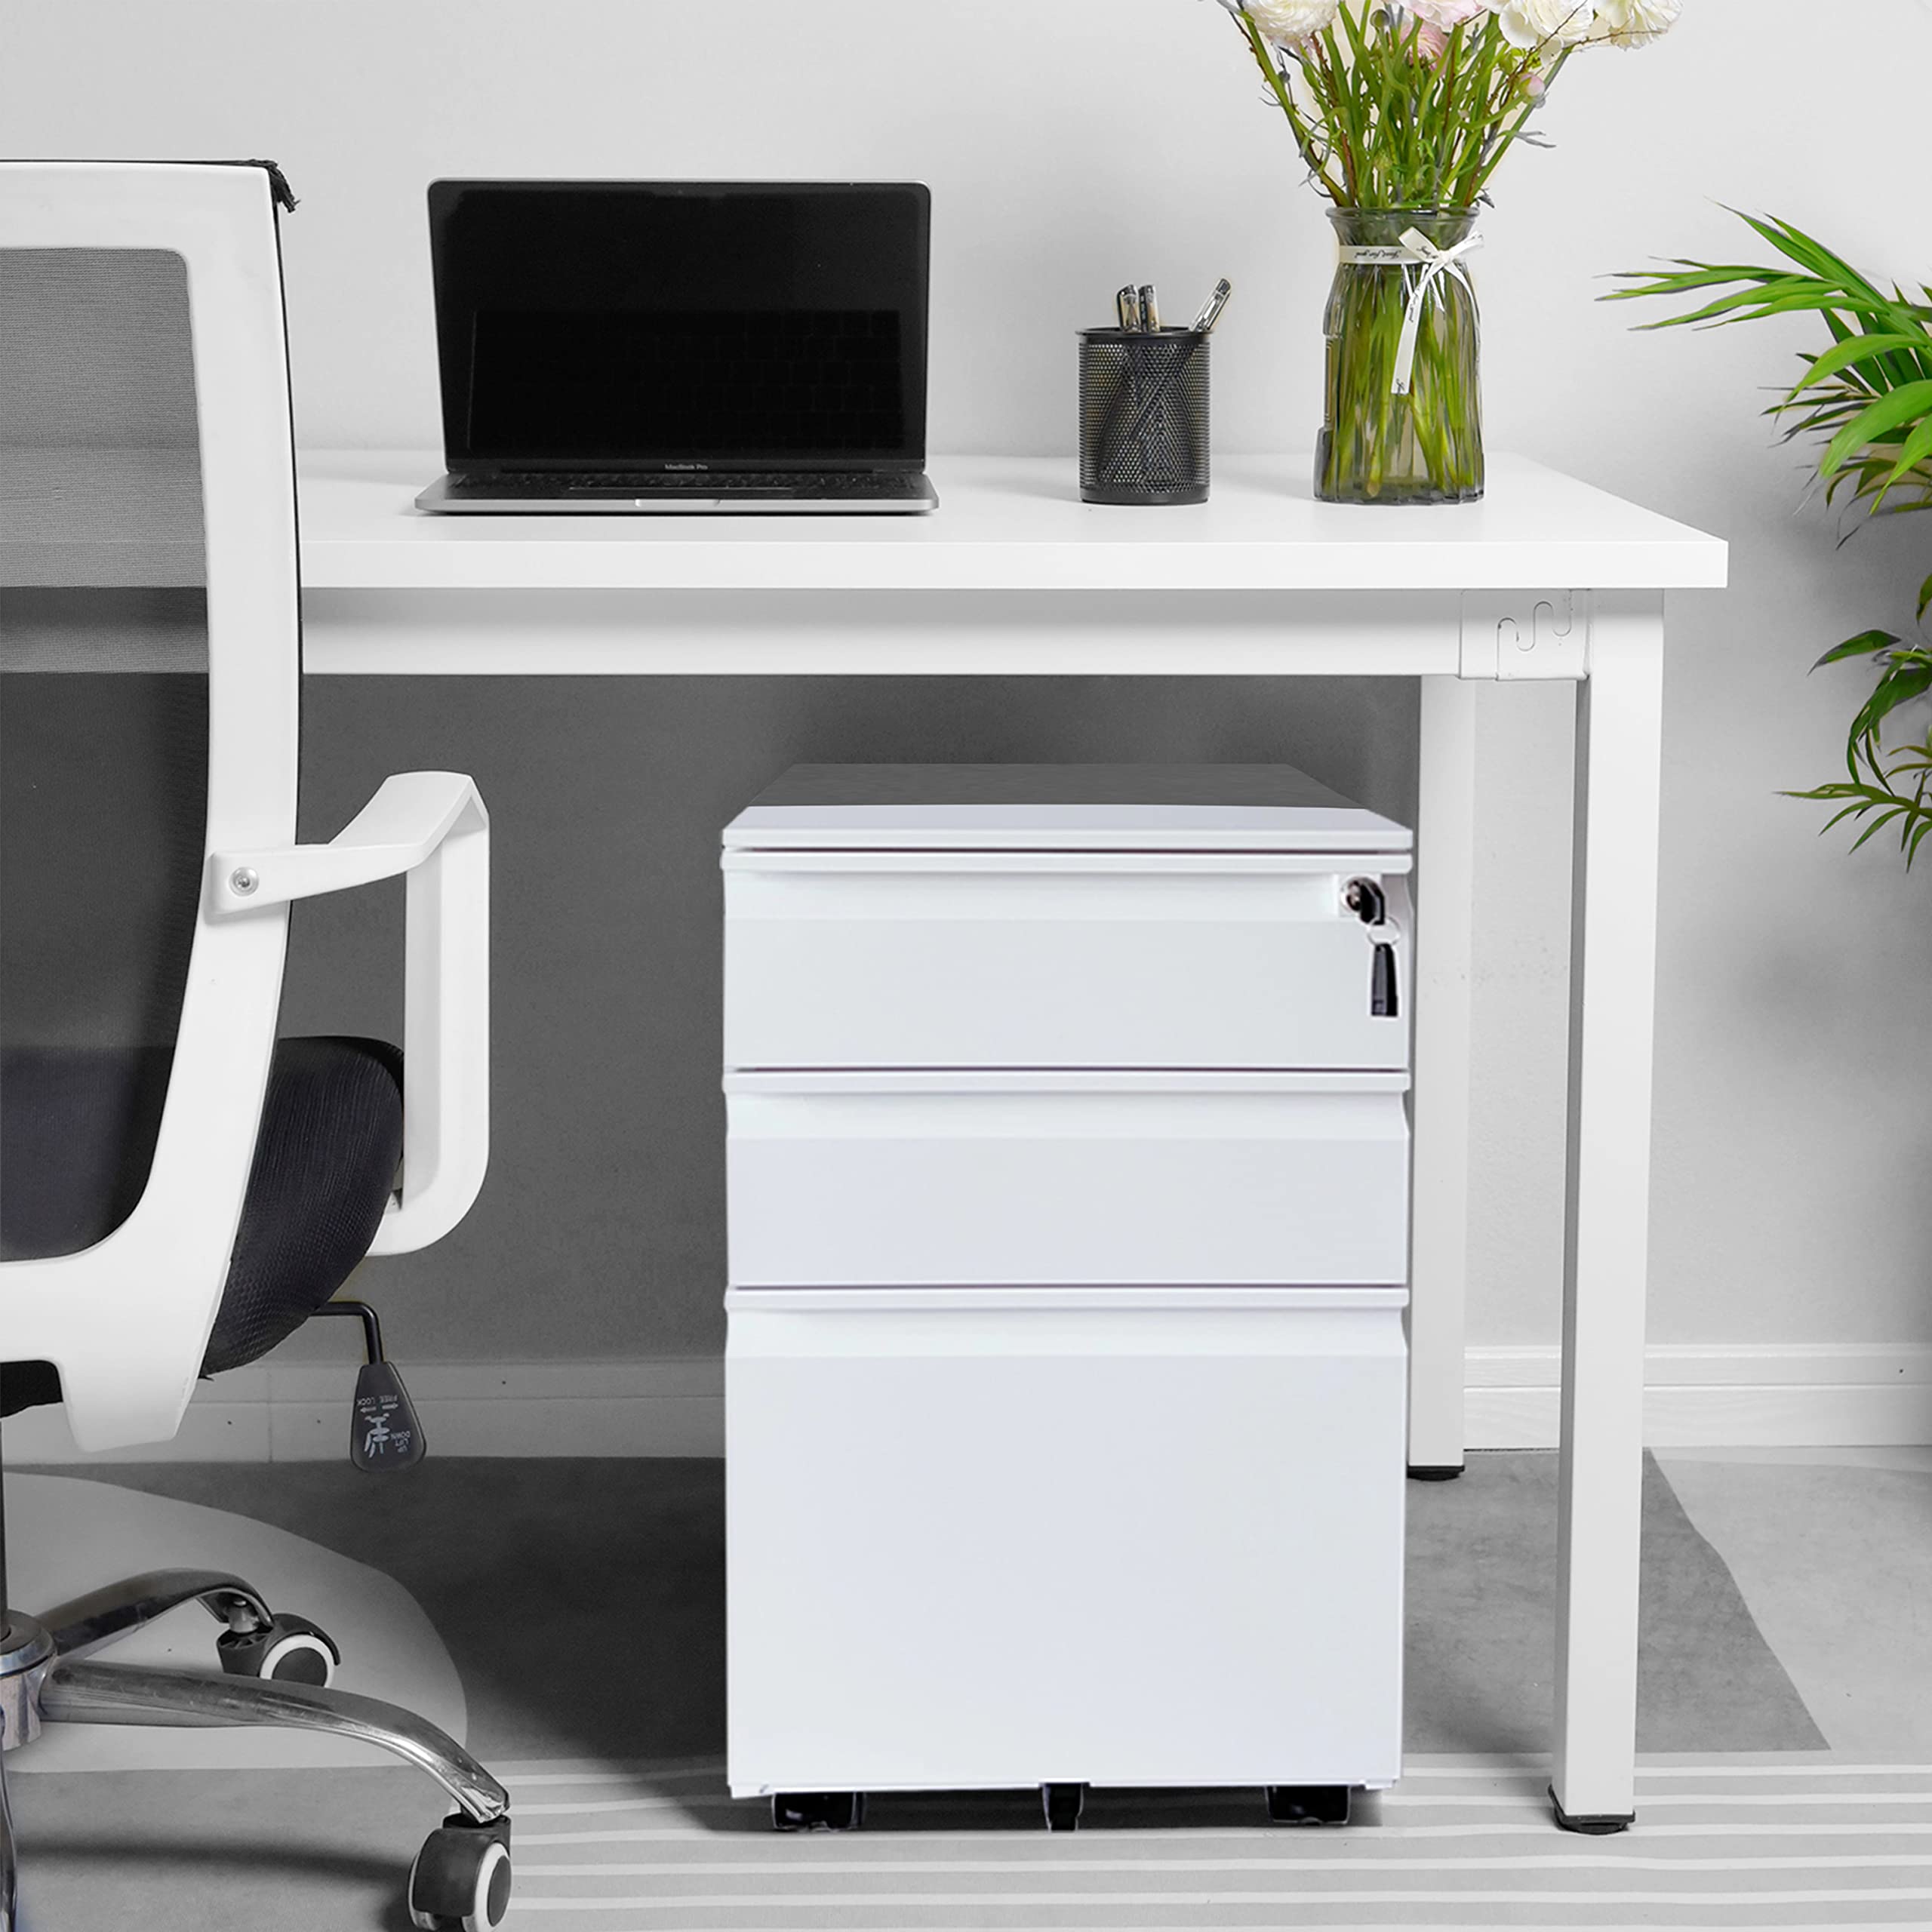 Sanoolir 3-Drawer Mobile File Cabinets Rolling, Vertical Metal Filing Cabinet for Legal & Letter File Anti-tilt Design with Lock Under Desk Office Drawers Fully Assembled (White)